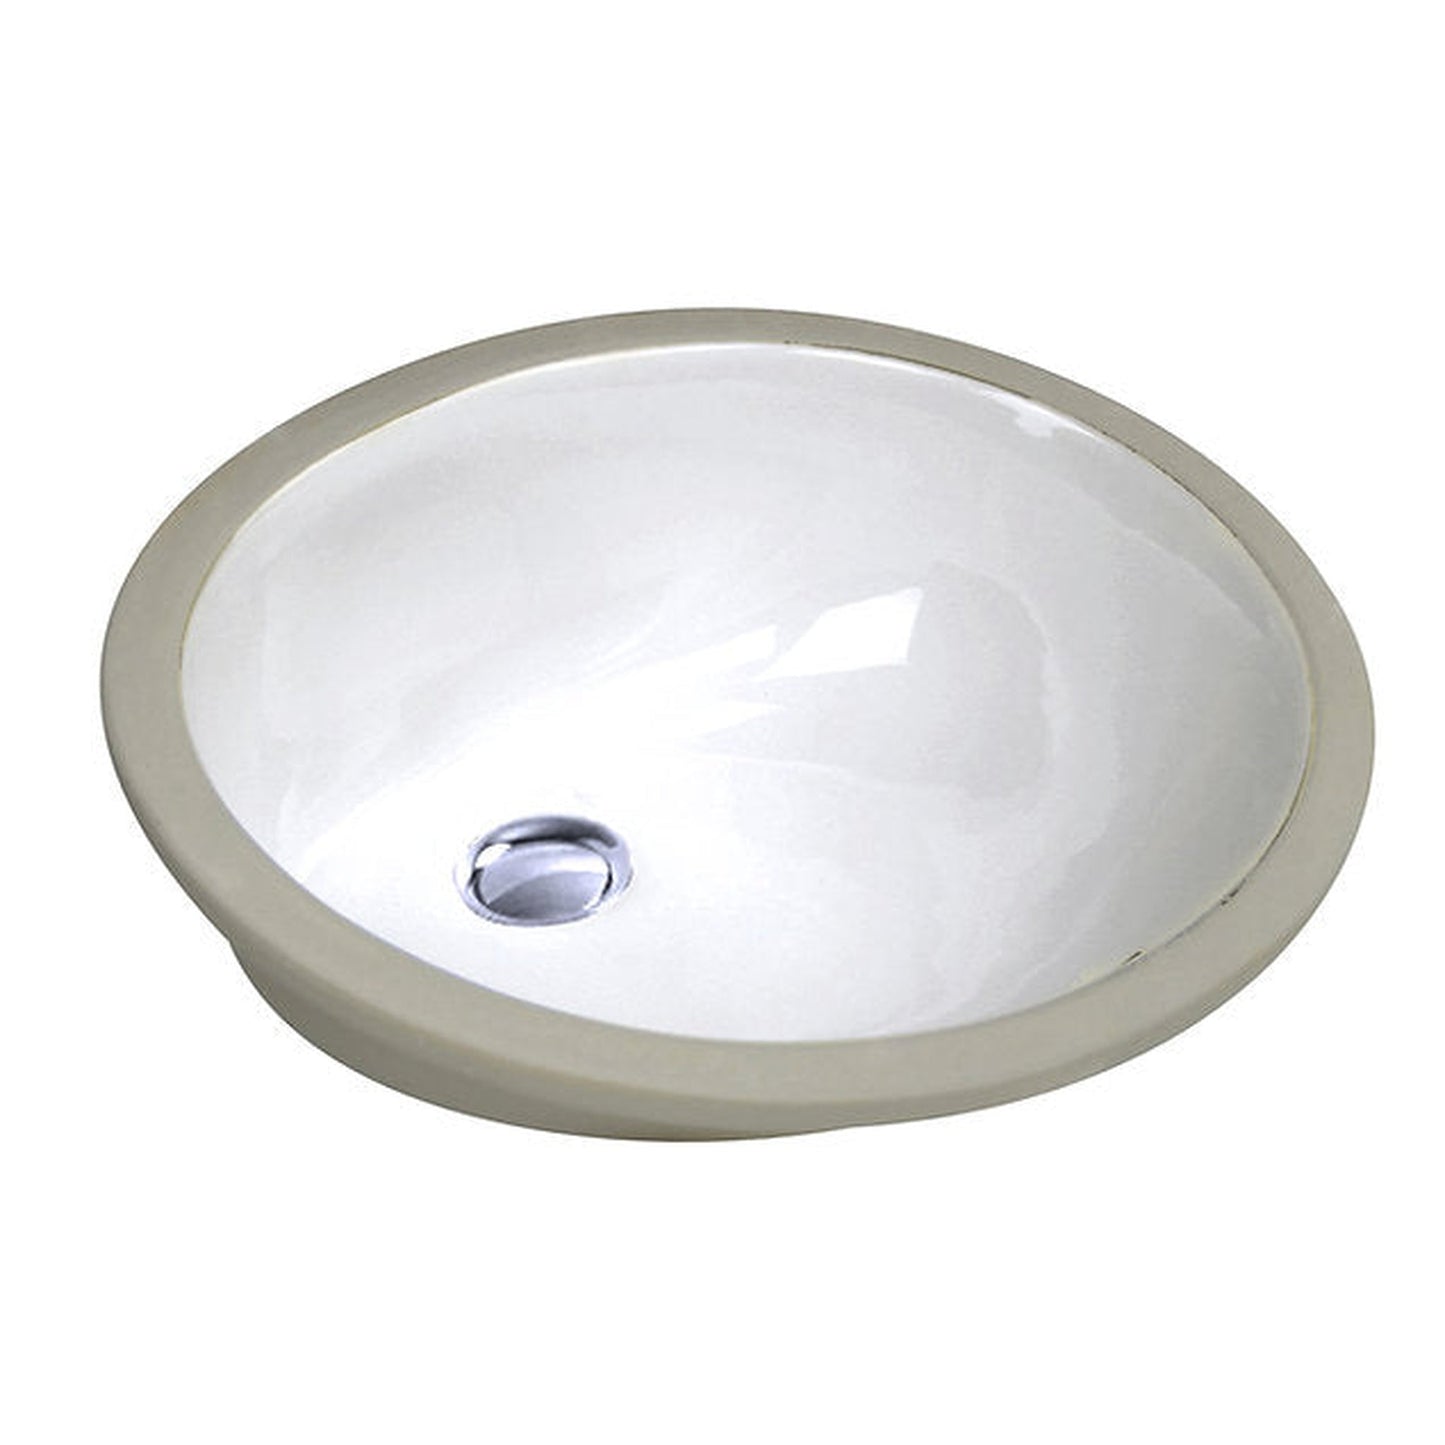 Nantucket Sinks Great Point 17" W x 14" D Oval White Porcelain Enamel Glaze Undermount Ceramic Sink With Oveflow